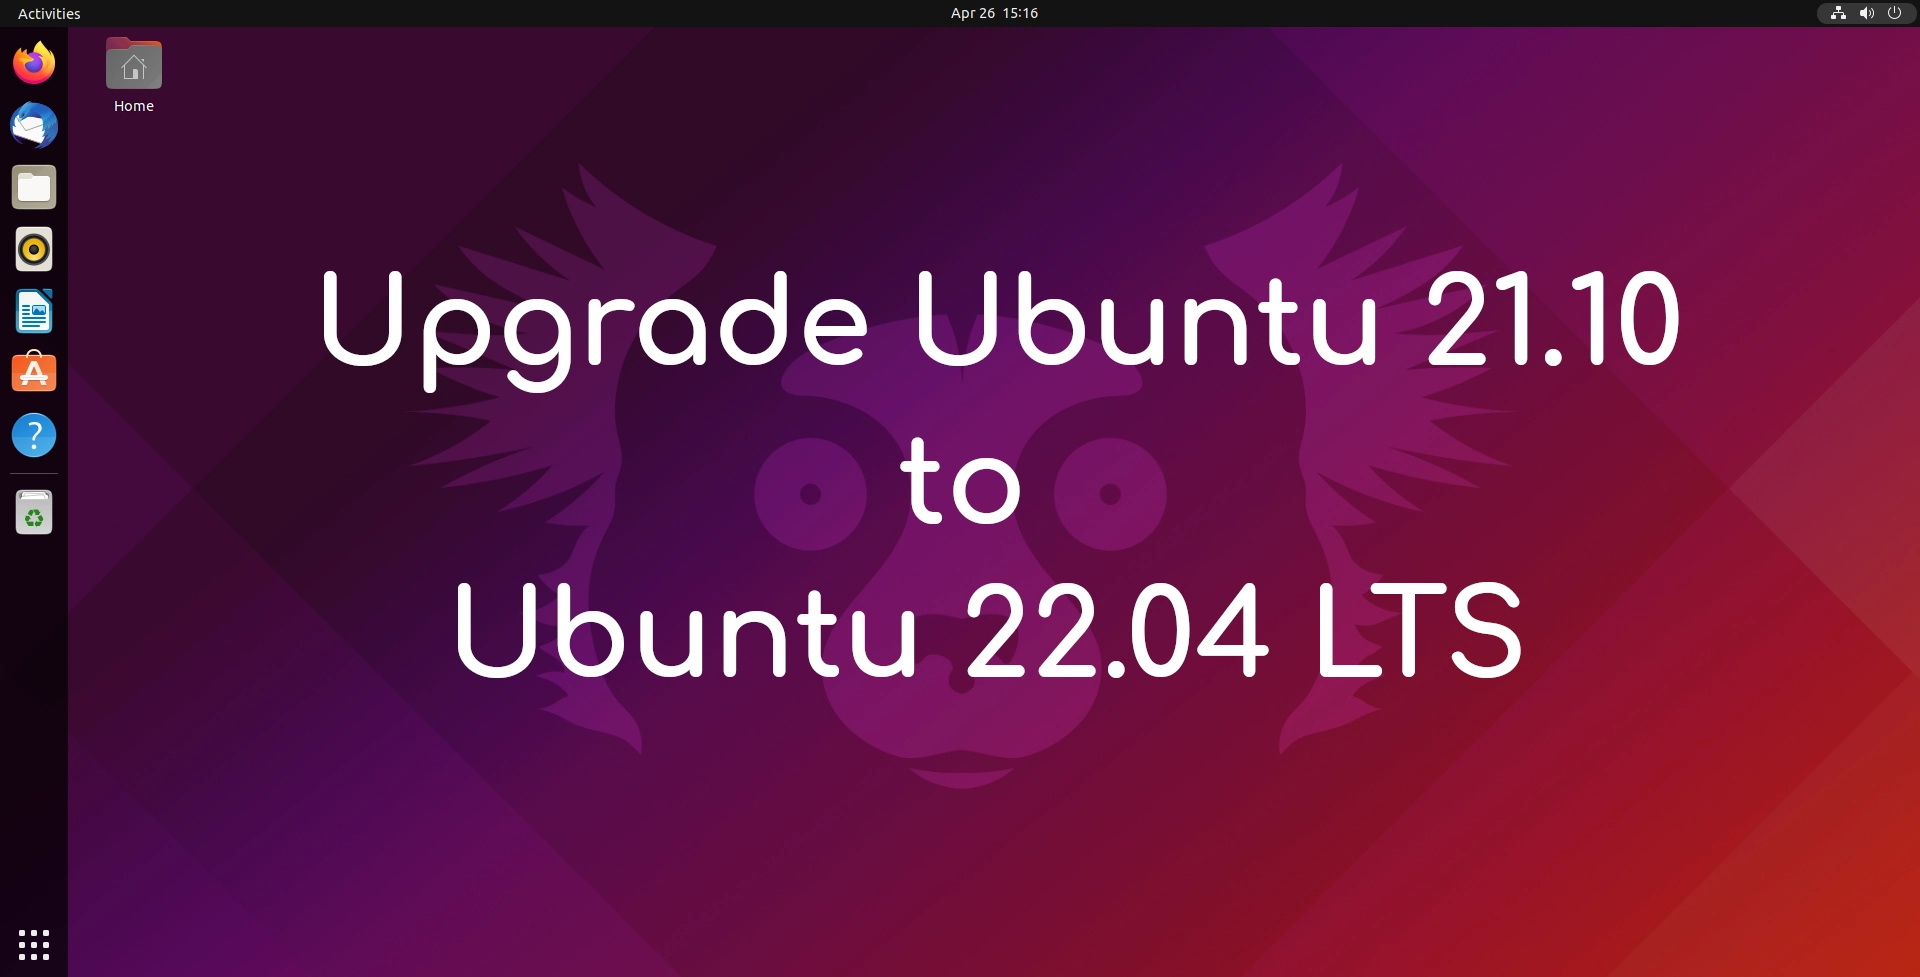 You Can Now Upgrade Ubuntu 21.10 to Ubuntu 22.04 LTS, Here’s How